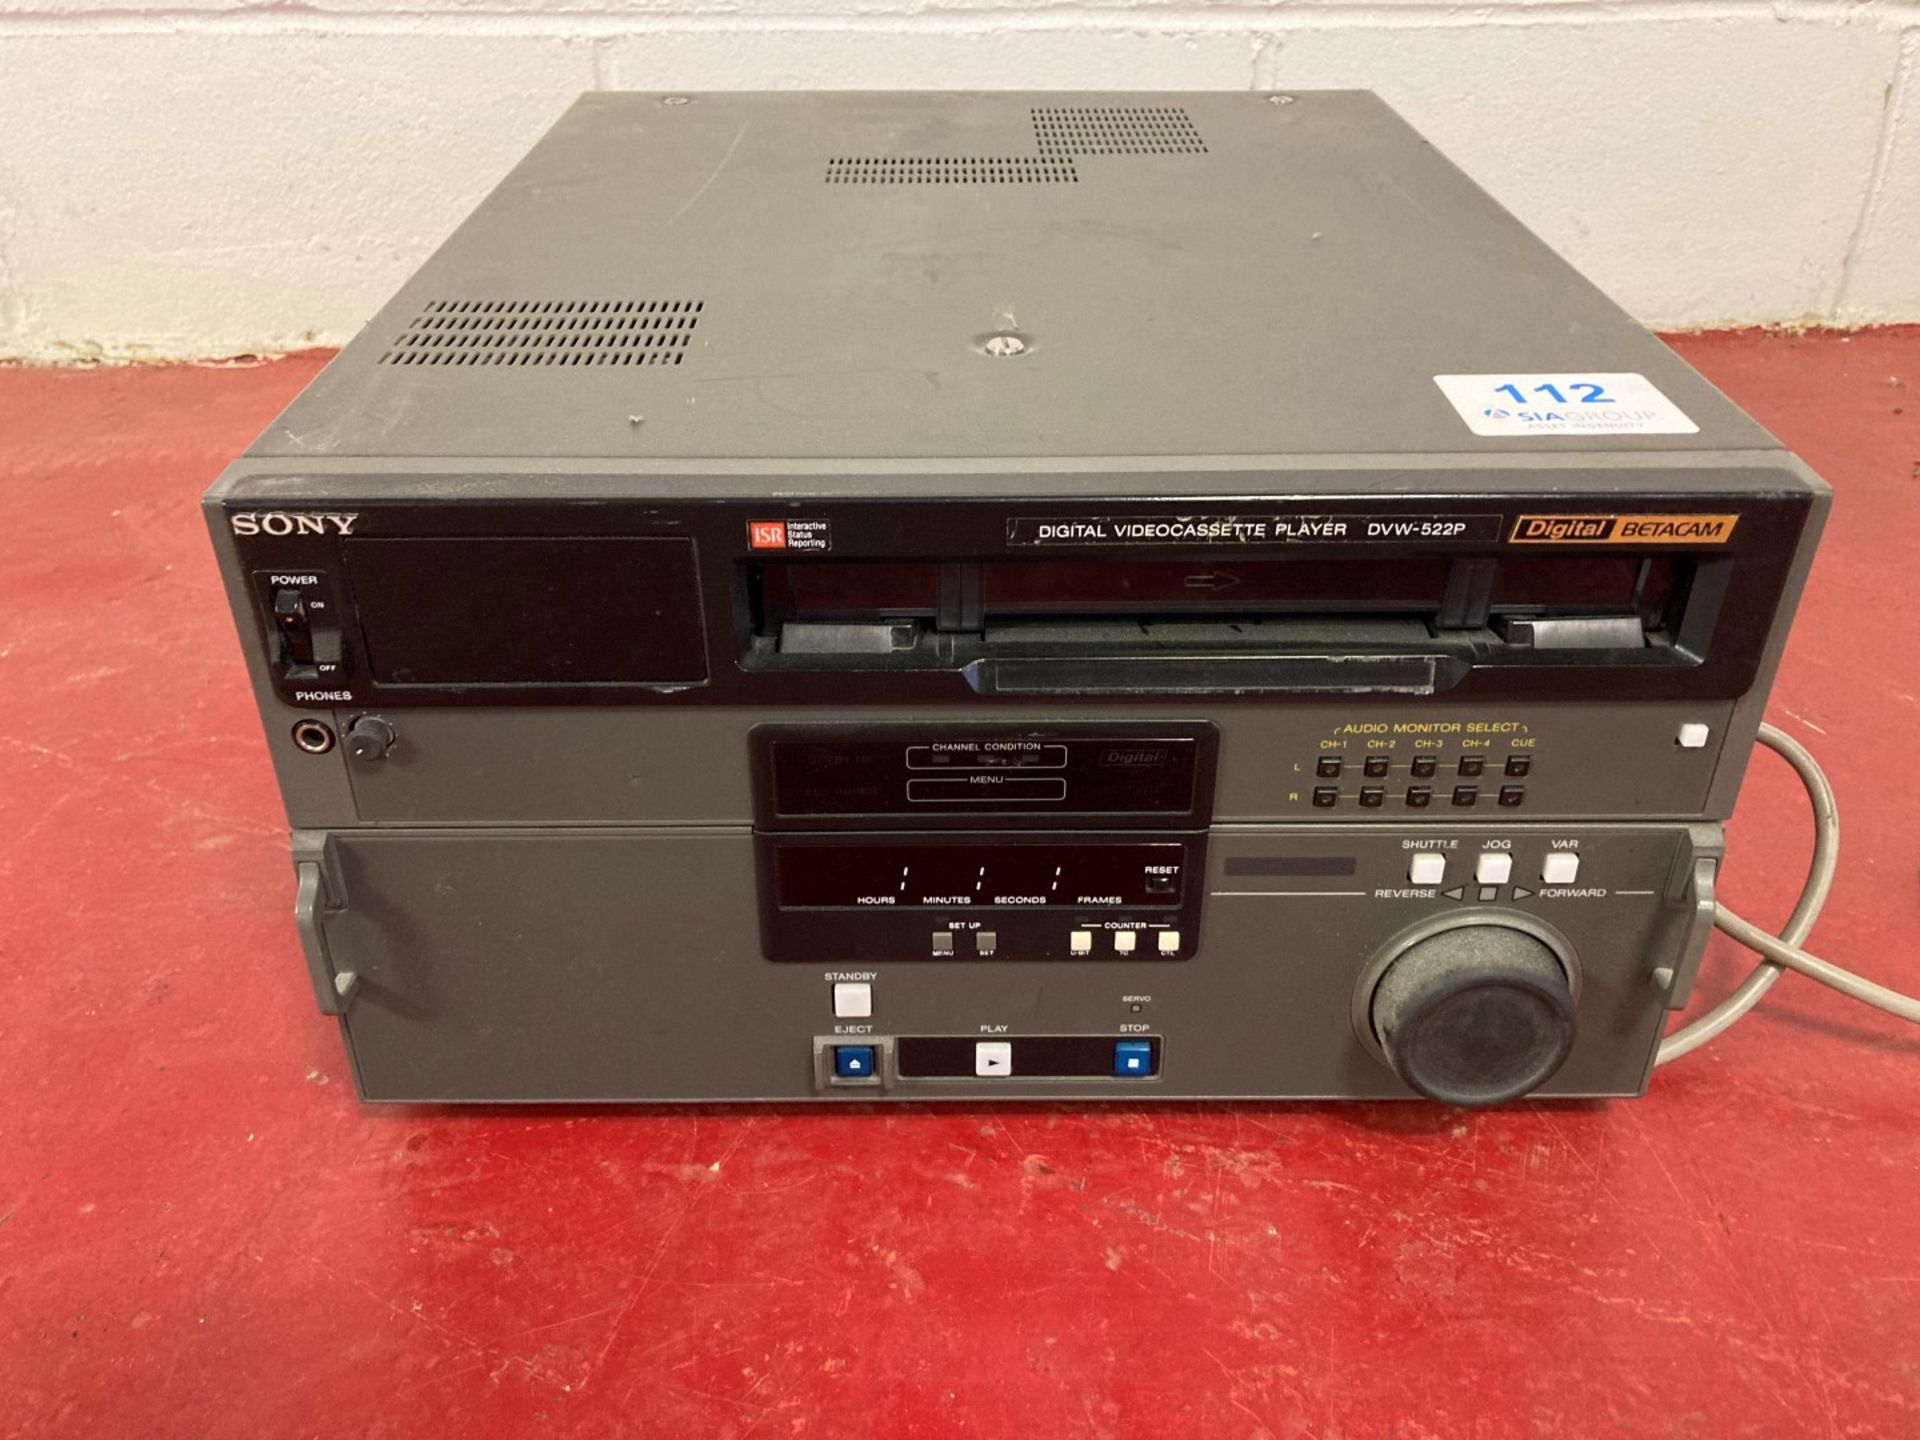 Sony DVW-522P betacam digital video cassette tape player